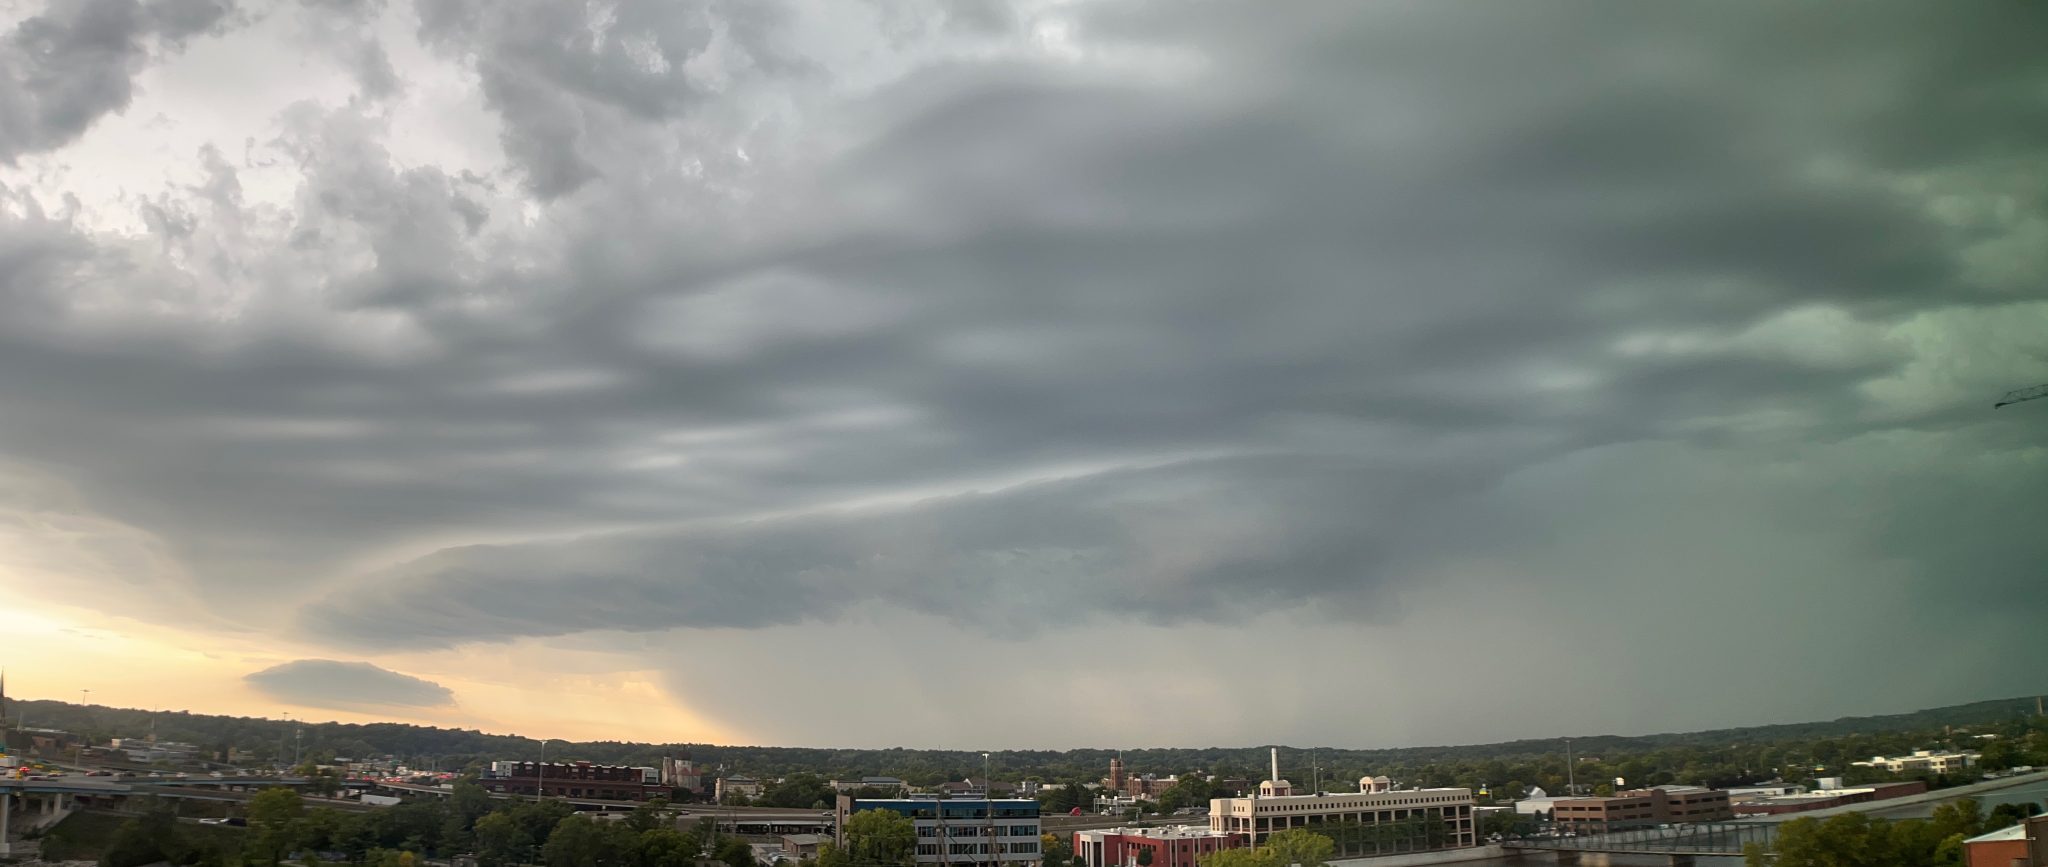 Storm over Grand Rapids, Michigan